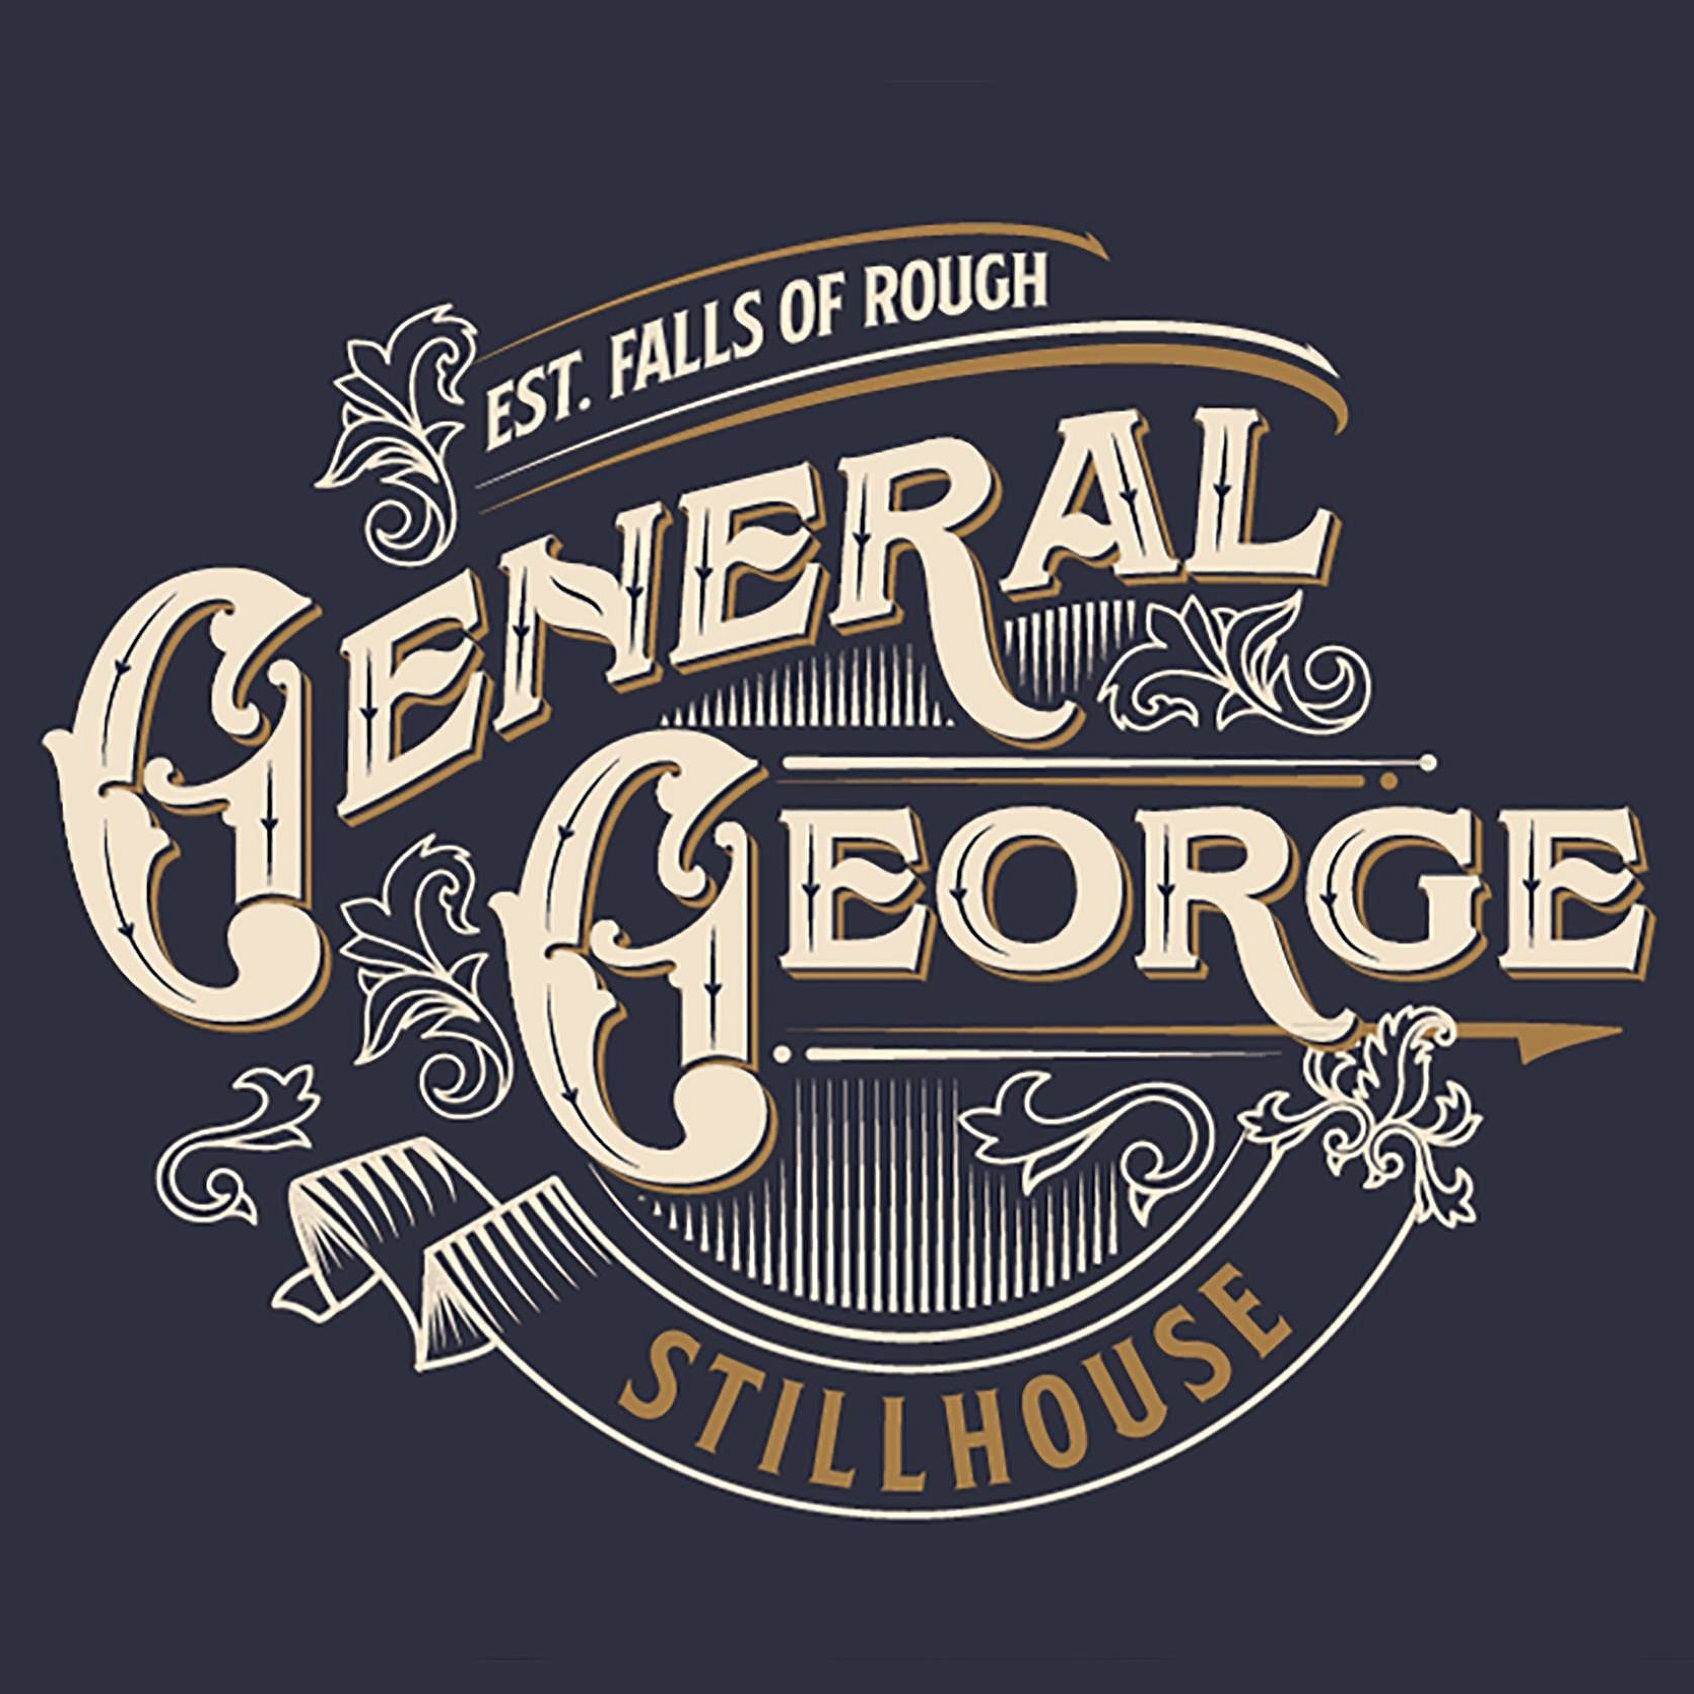 General George Stillhouse logo